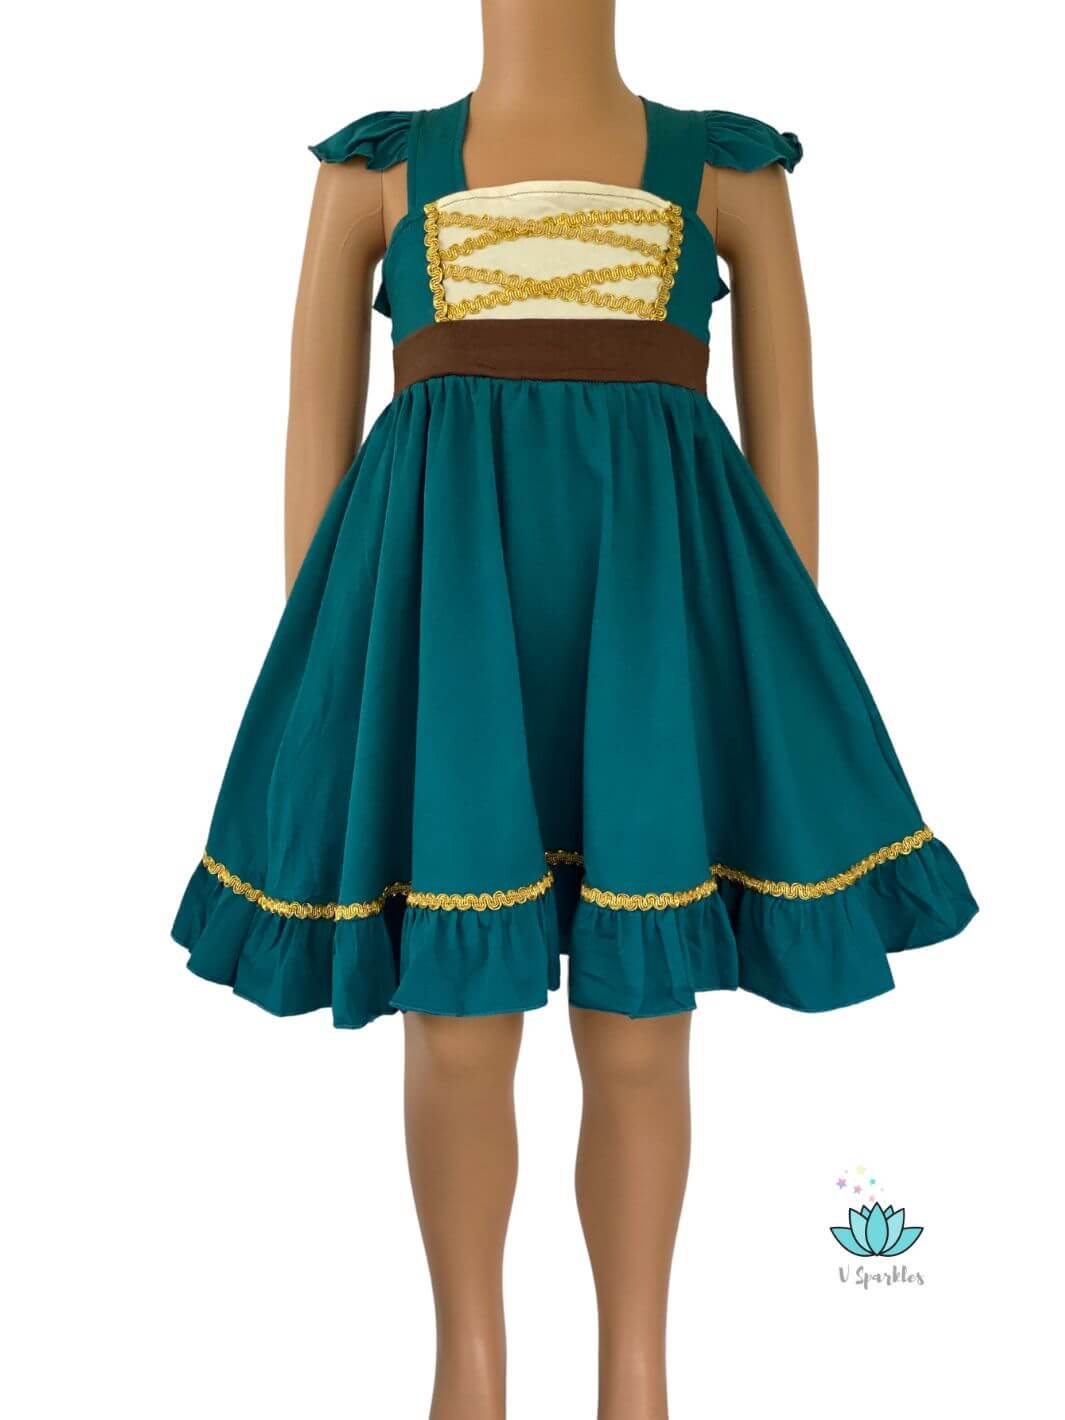 merida dress for kids, gold lace, teal blue dress, comfortable dress